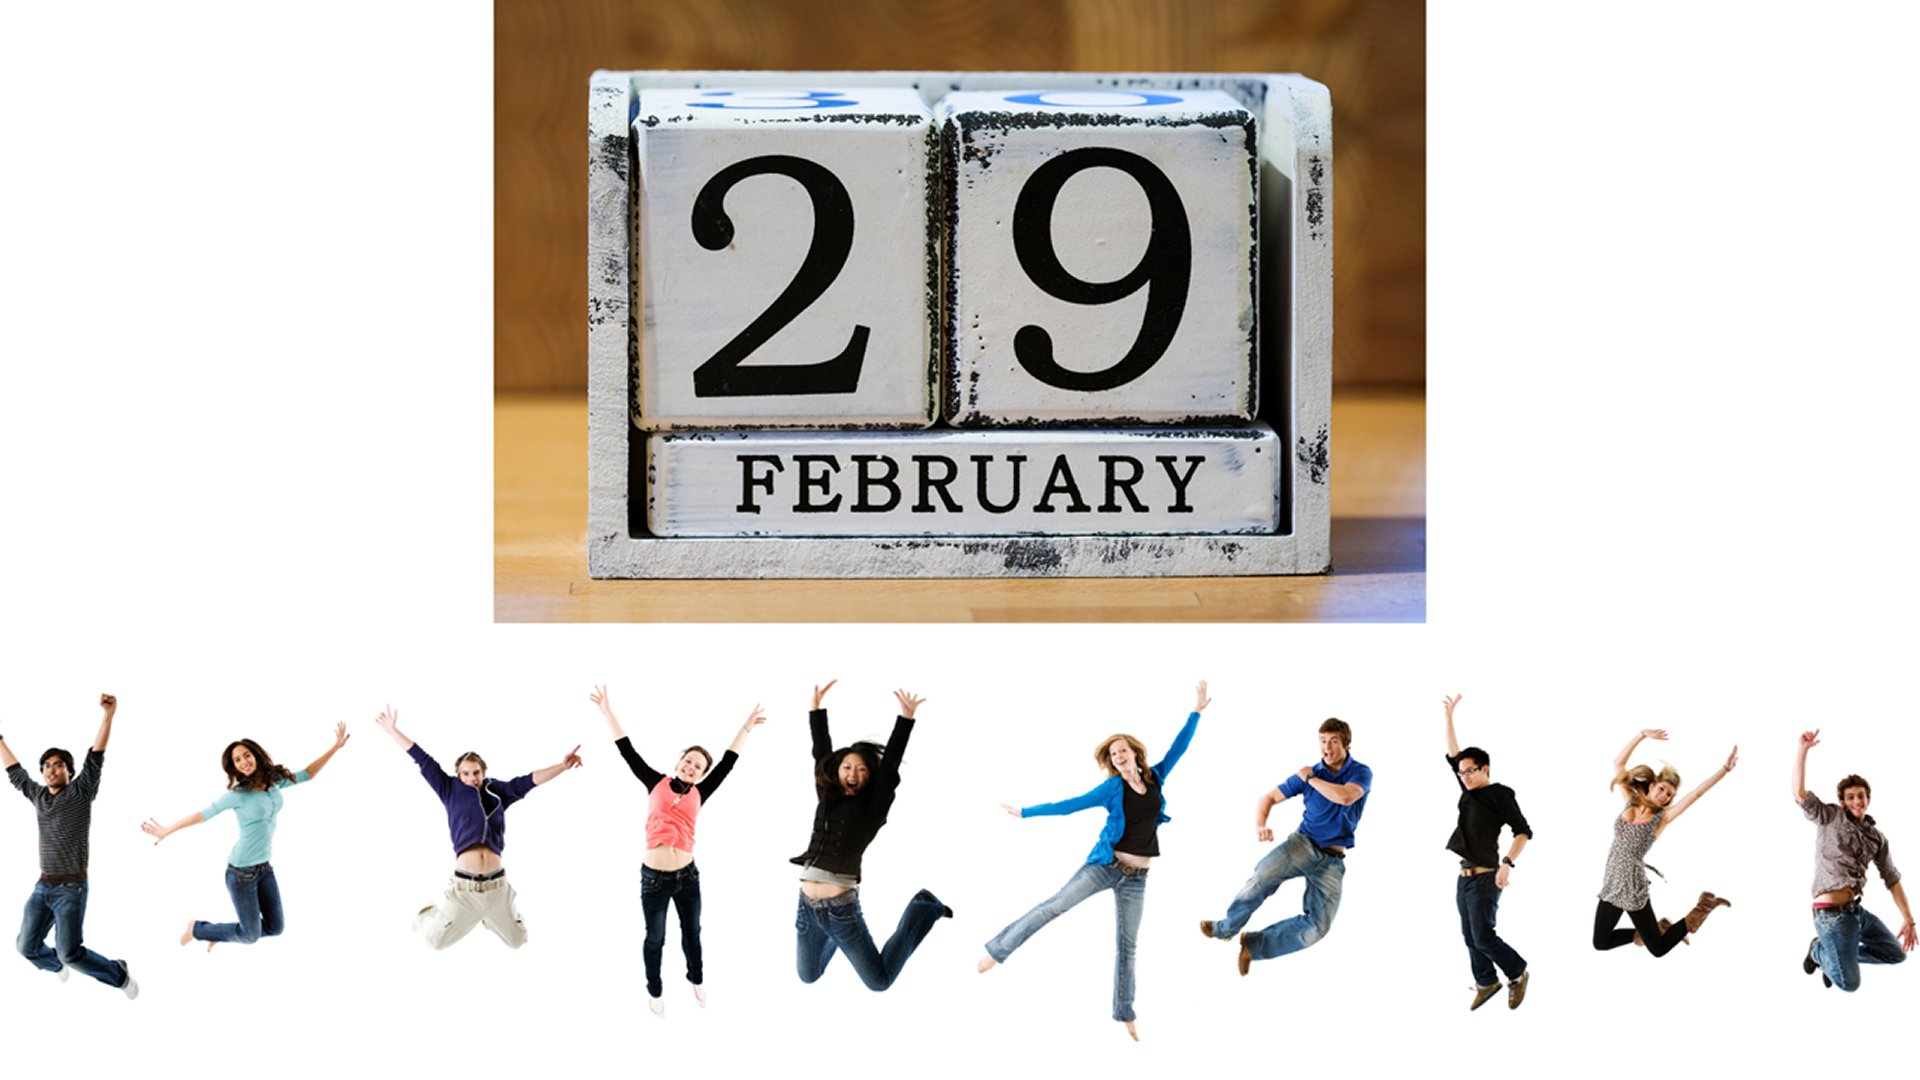 Celebrating February 29th